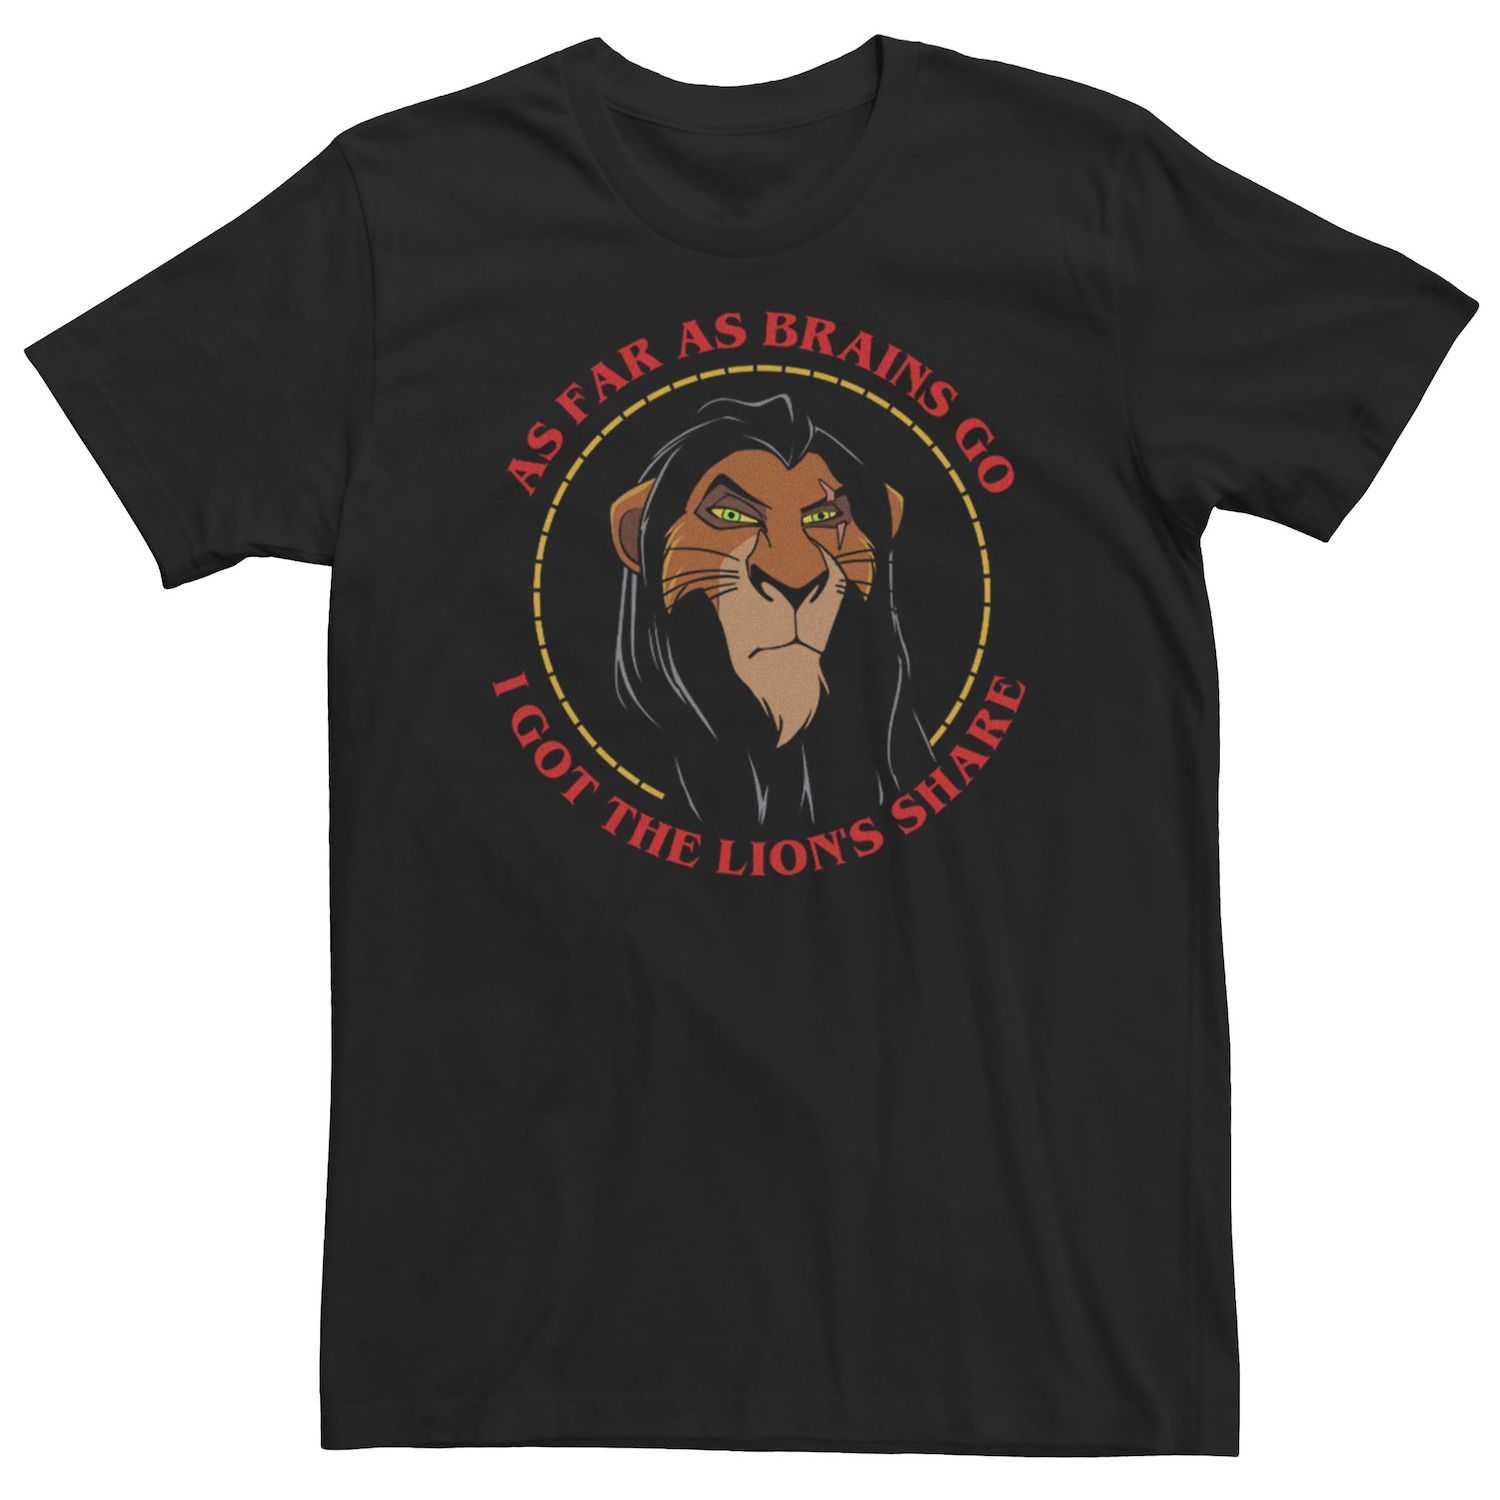 Мужская футболка со шрамом «Король Лев» Насколько мозги идут I Got Lions Share Disney lions share cd lions share two